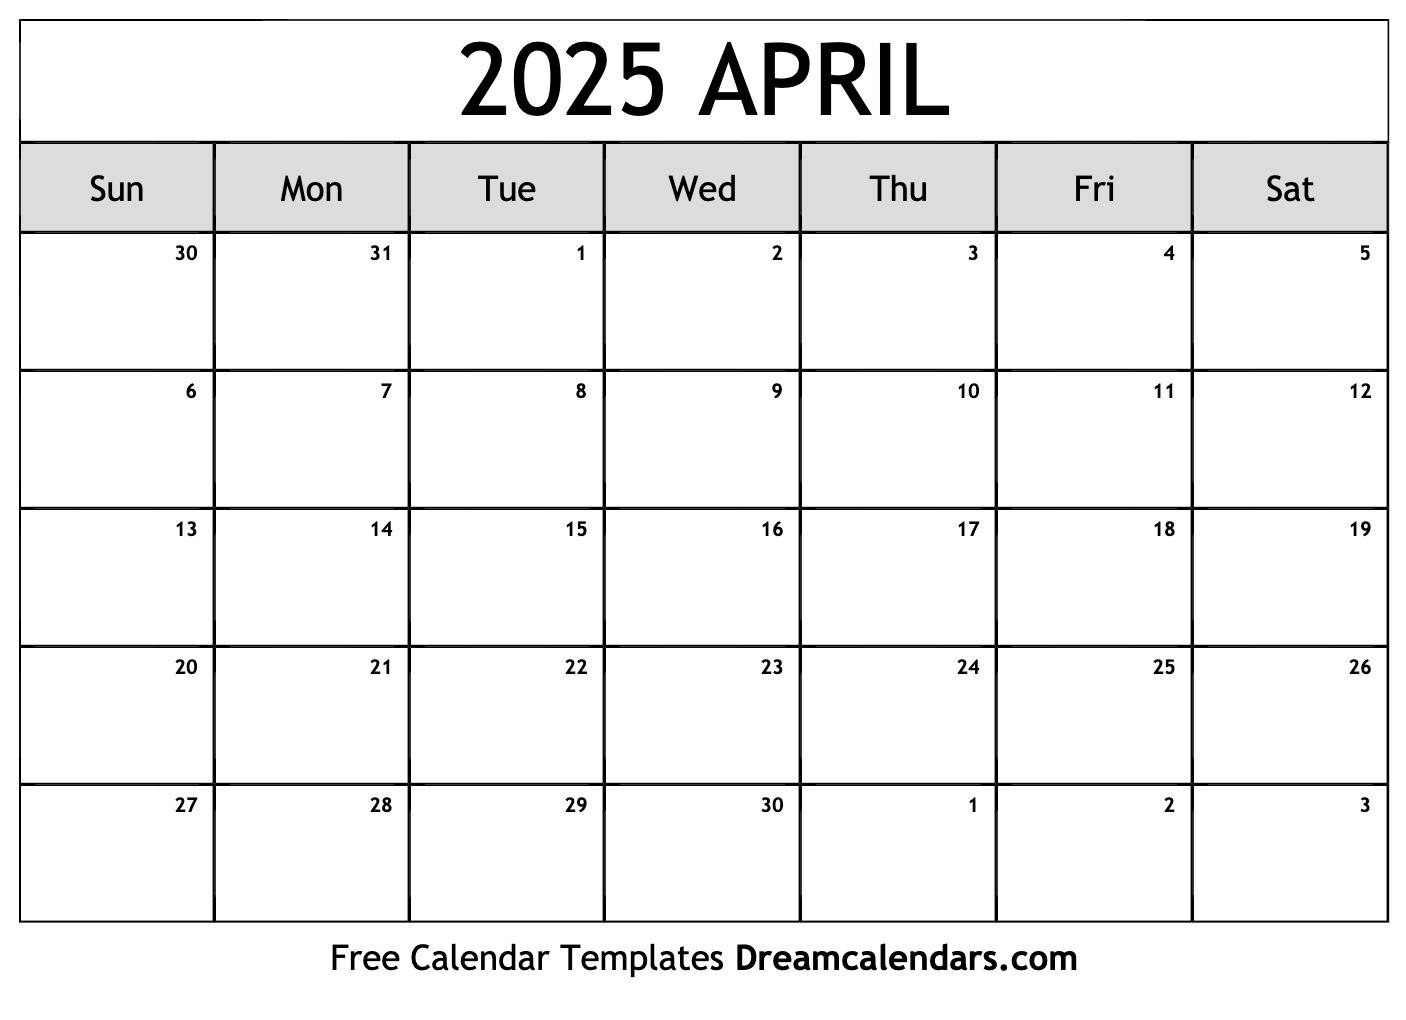 April 2025 Calendar Free Blank Printable With Holidays